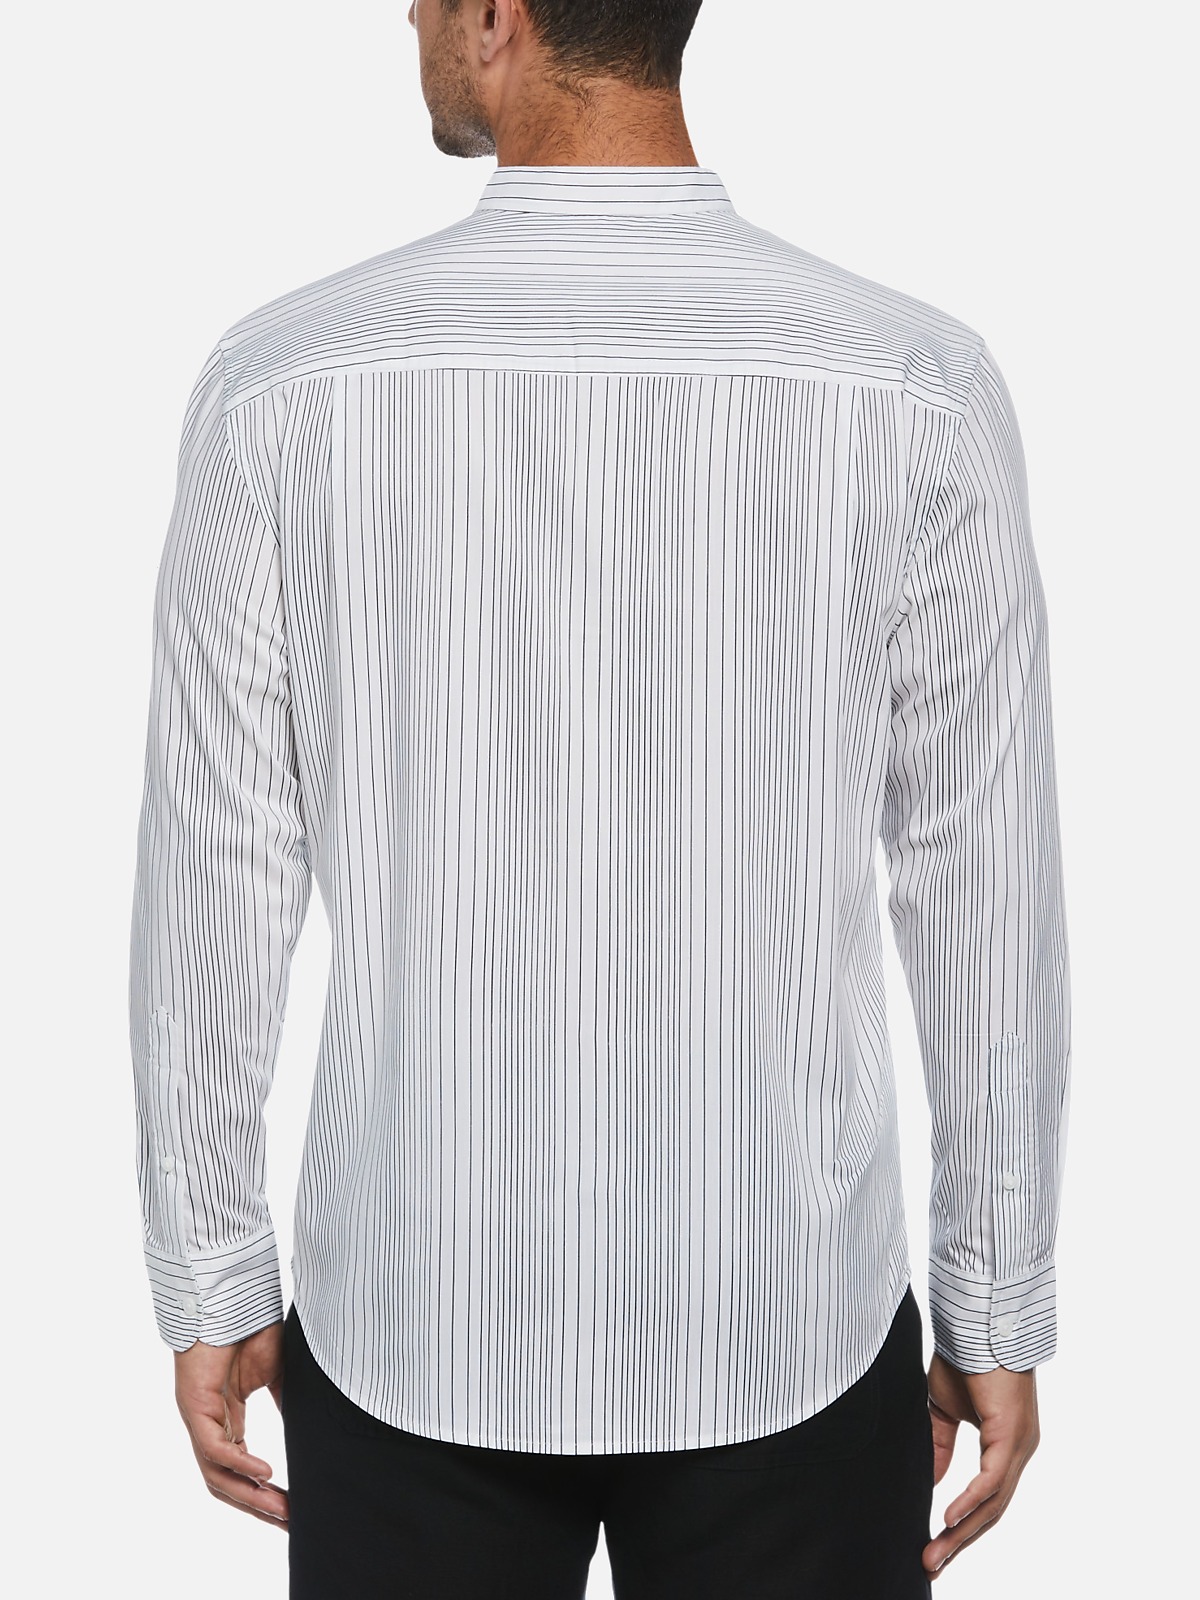 Cubavera Classic Fit Multi-Stripe Band Collar Long Sleeve Shirt